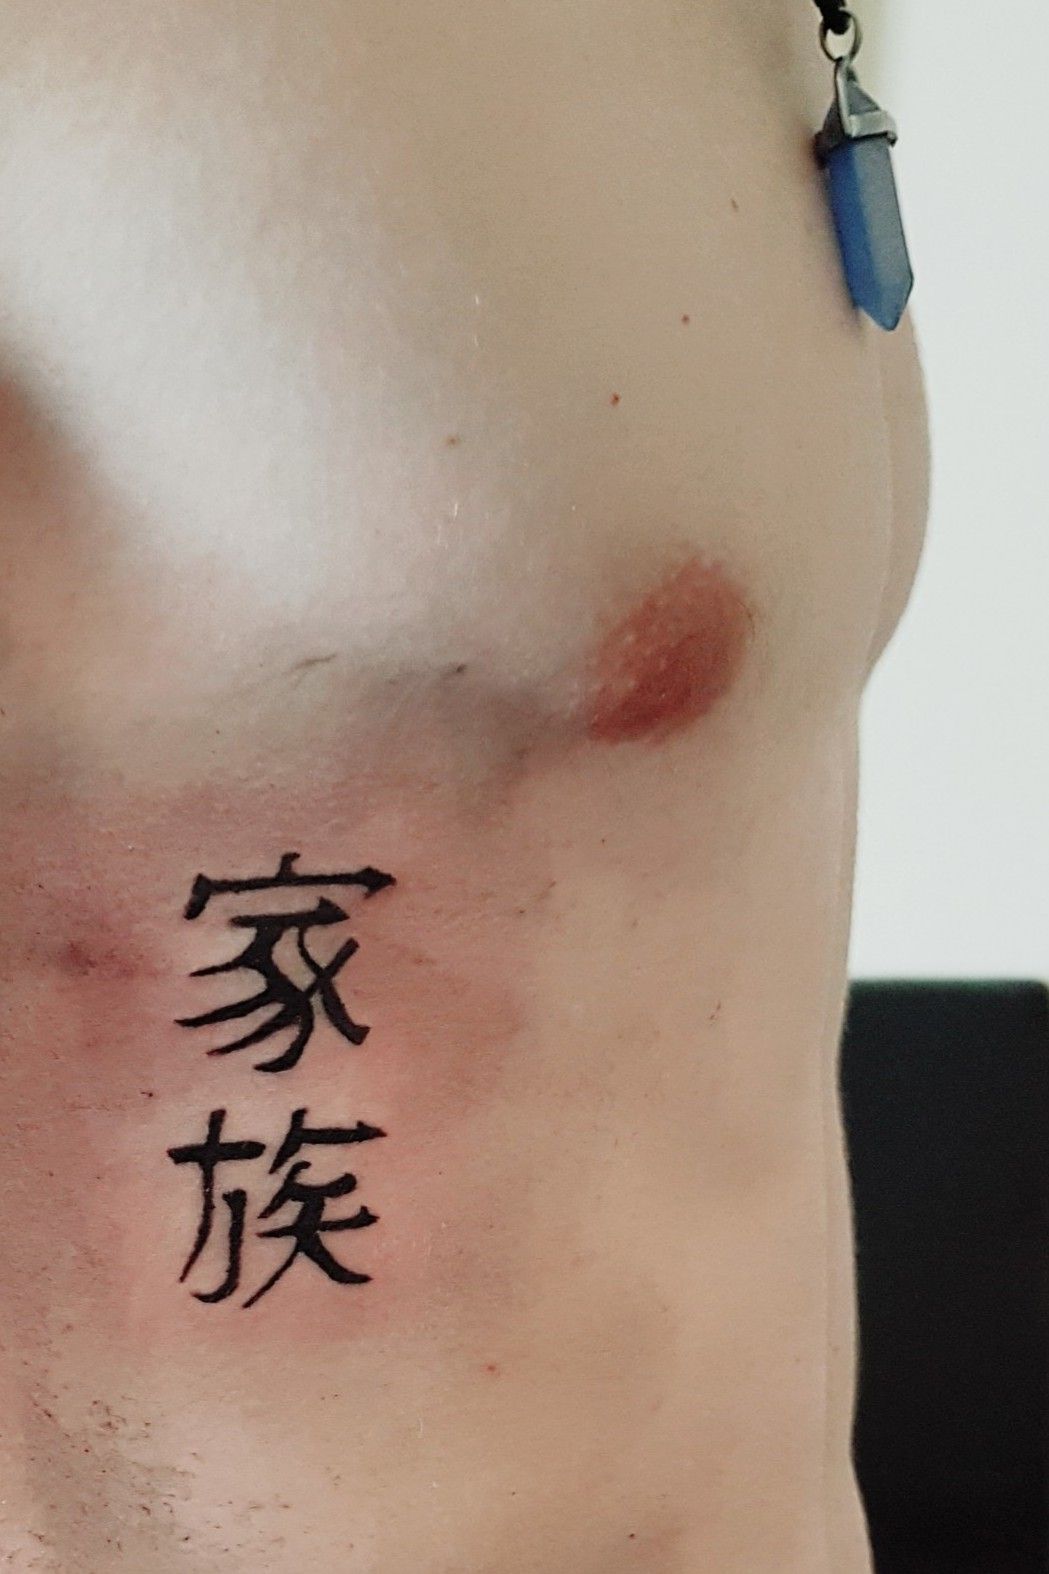 Tattoo ideas  Japanese tattoo symbols Chinese symbol tattoos Symbol for family  tattoo